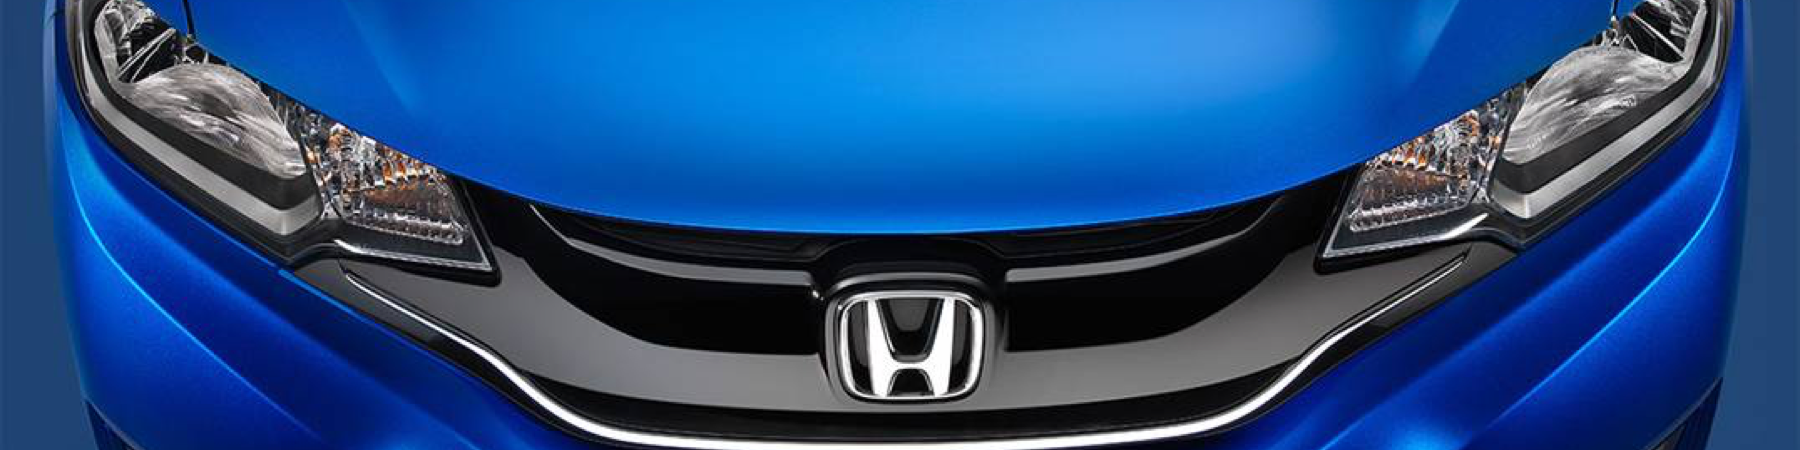 front headlights of Blue Honda